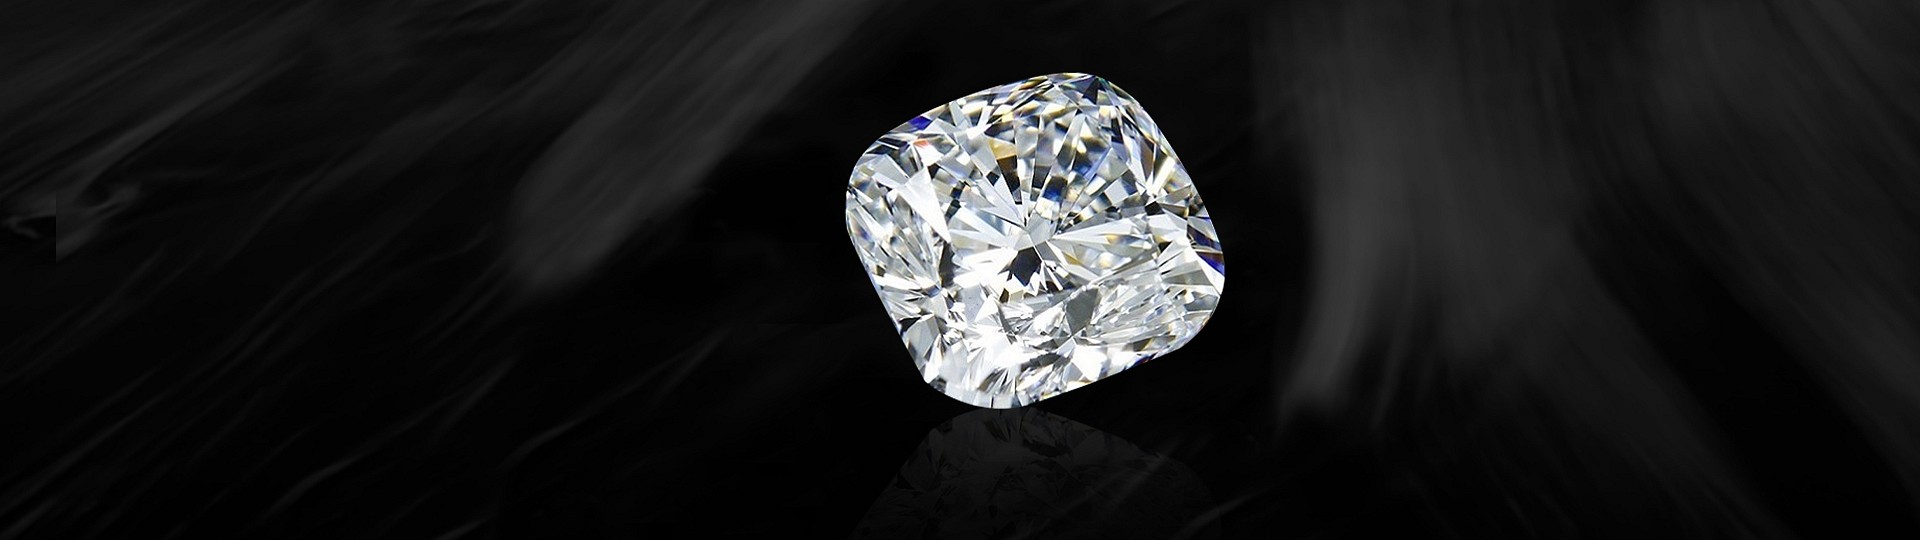 Creme De La Creme' Investment GIA Diamonds by Bid Global International Auctioneers LLC